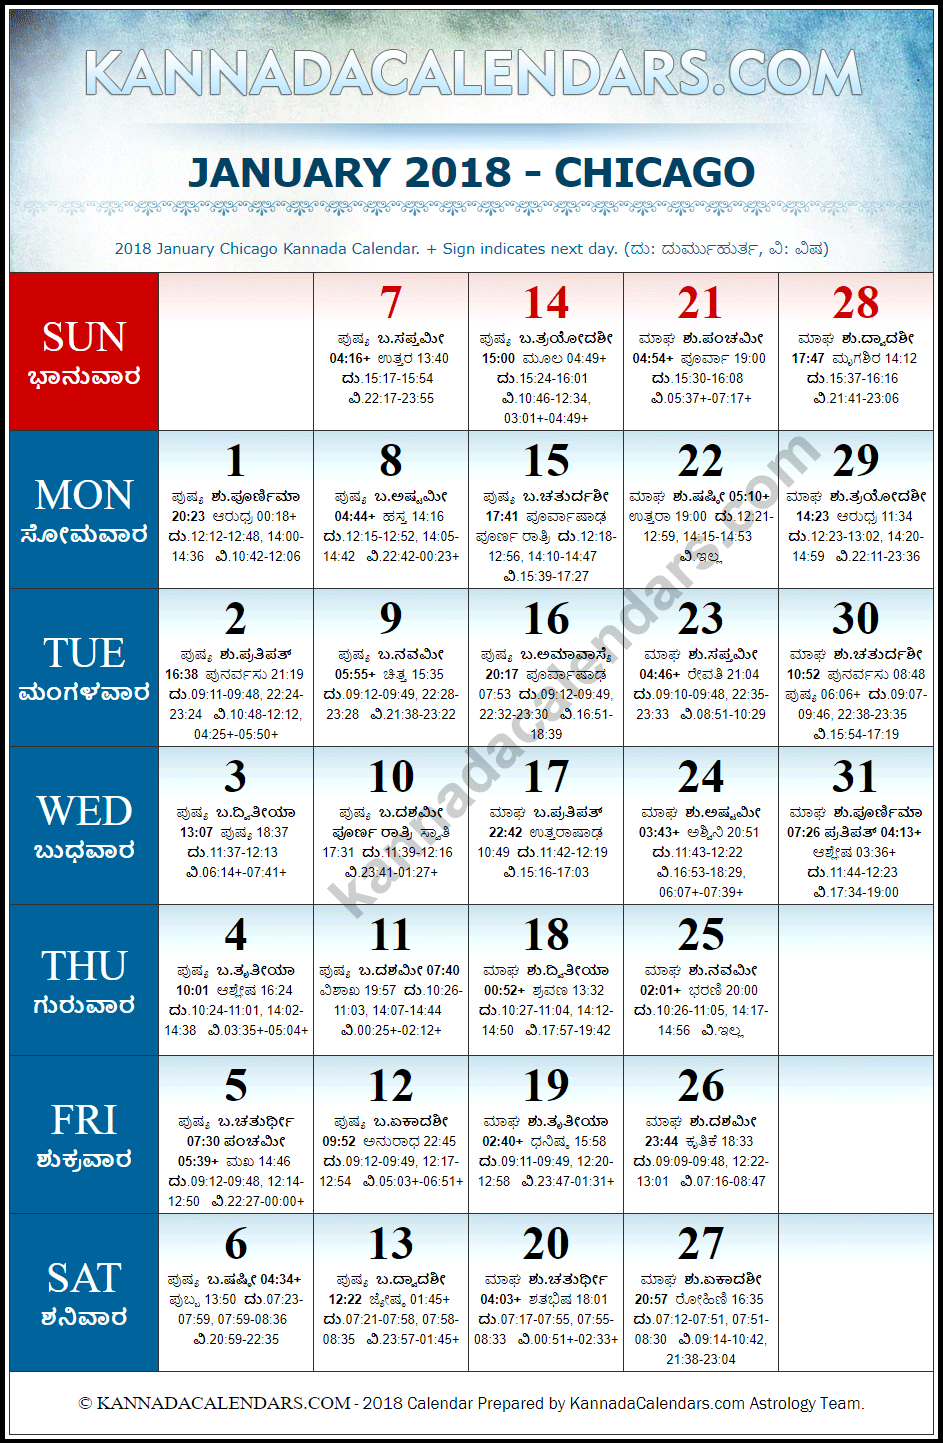 January 2018 Kannada Calendar for Chicago, USA